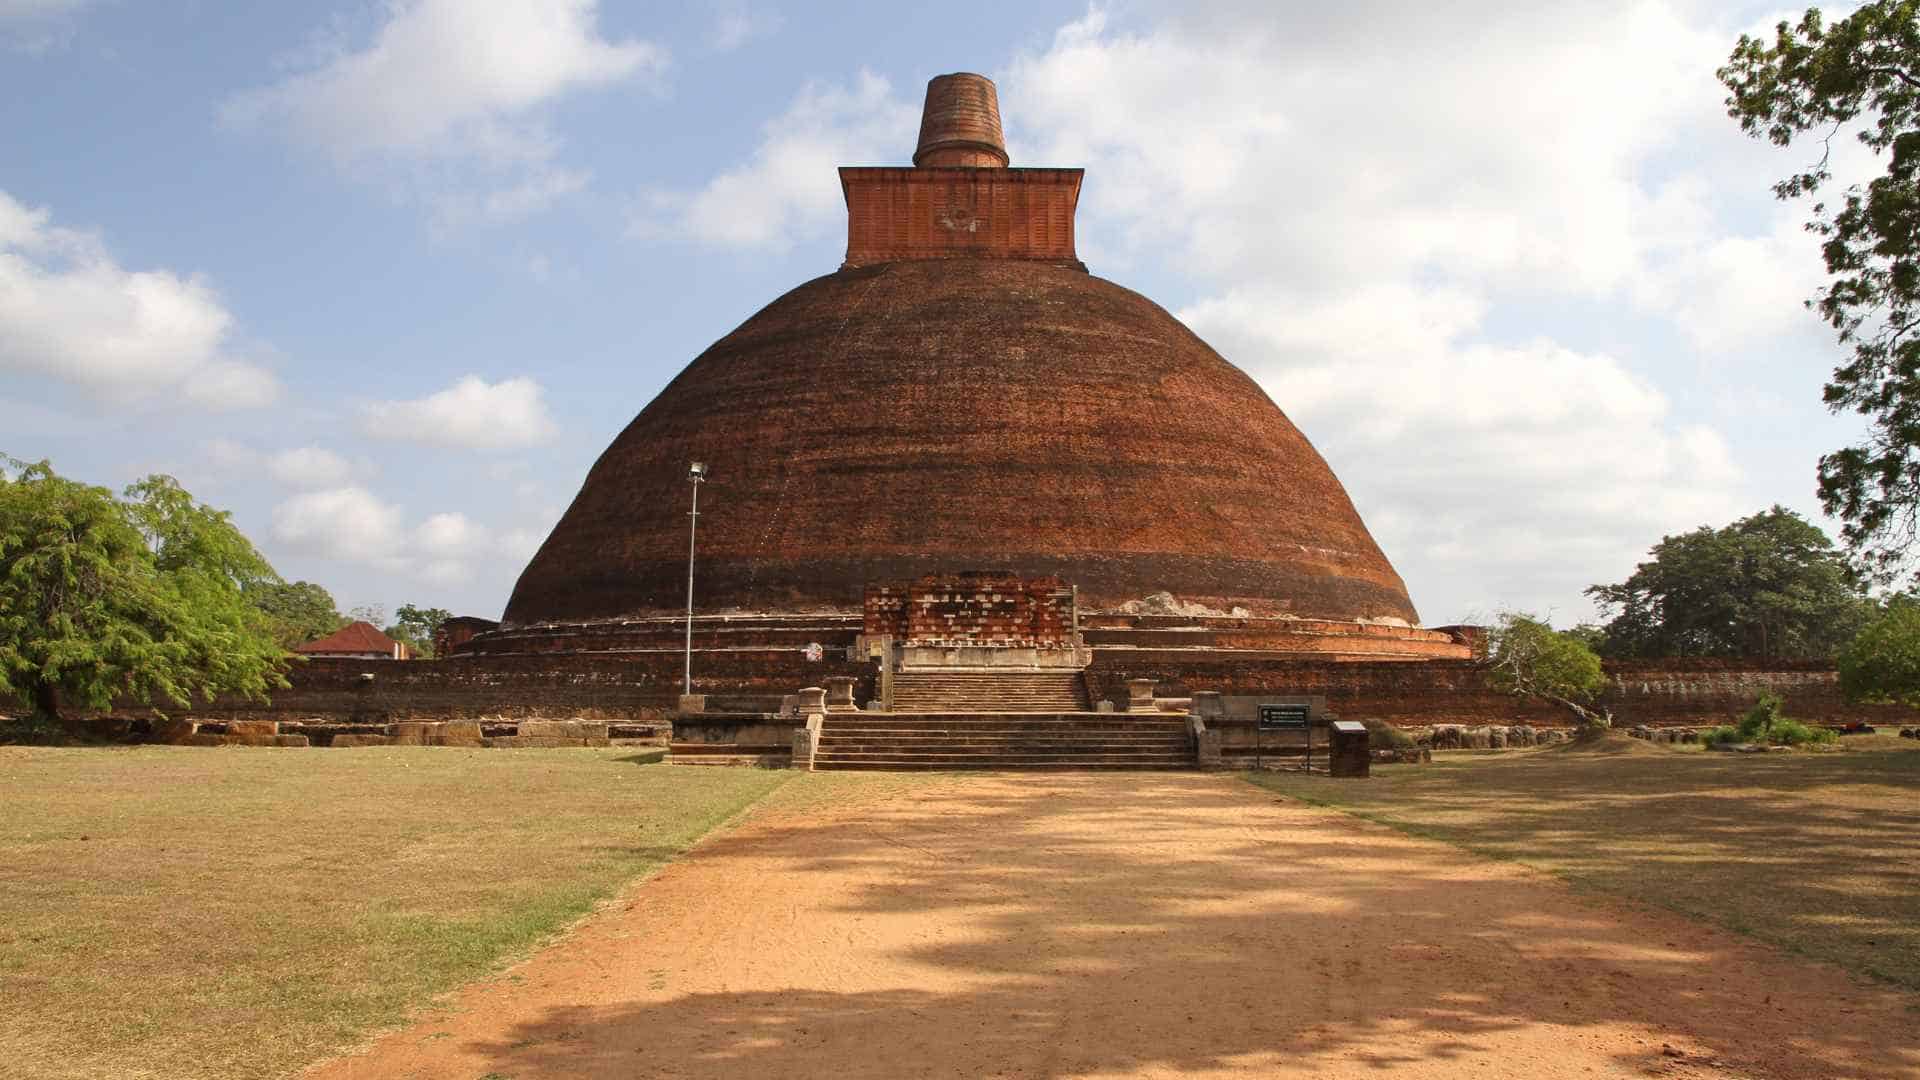 The Ruwanweliseya stupa in Anuradhapura, Sri Lanka